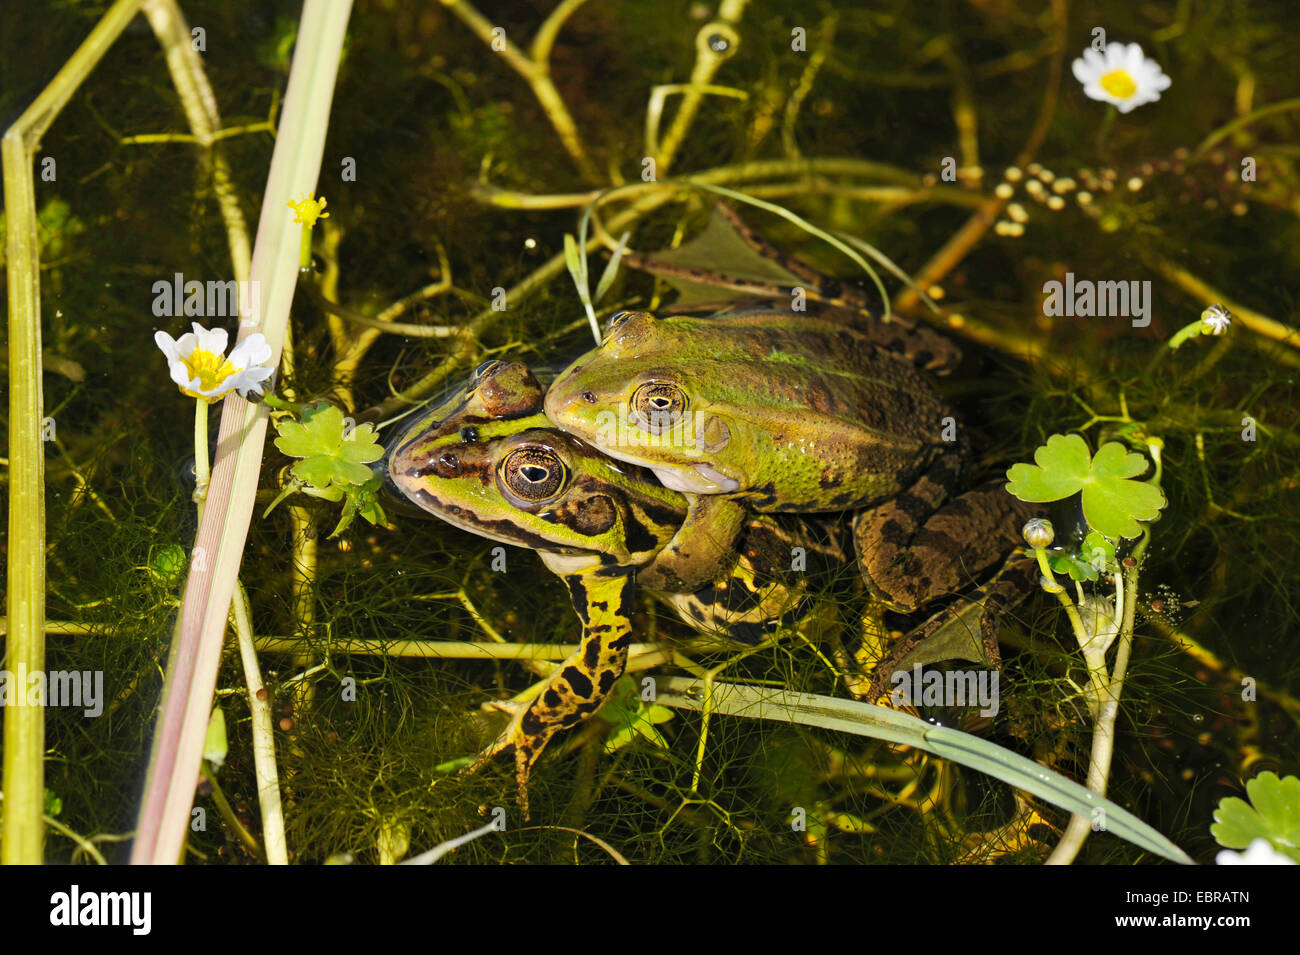 Pool frog, Little waterfrog (Rana lessonae, Pelophylax lessonae, Rana bergeri, Pelophylax bergeri, Pelophylax lessonae bergeri), mating, France, Corsica Stock Photo